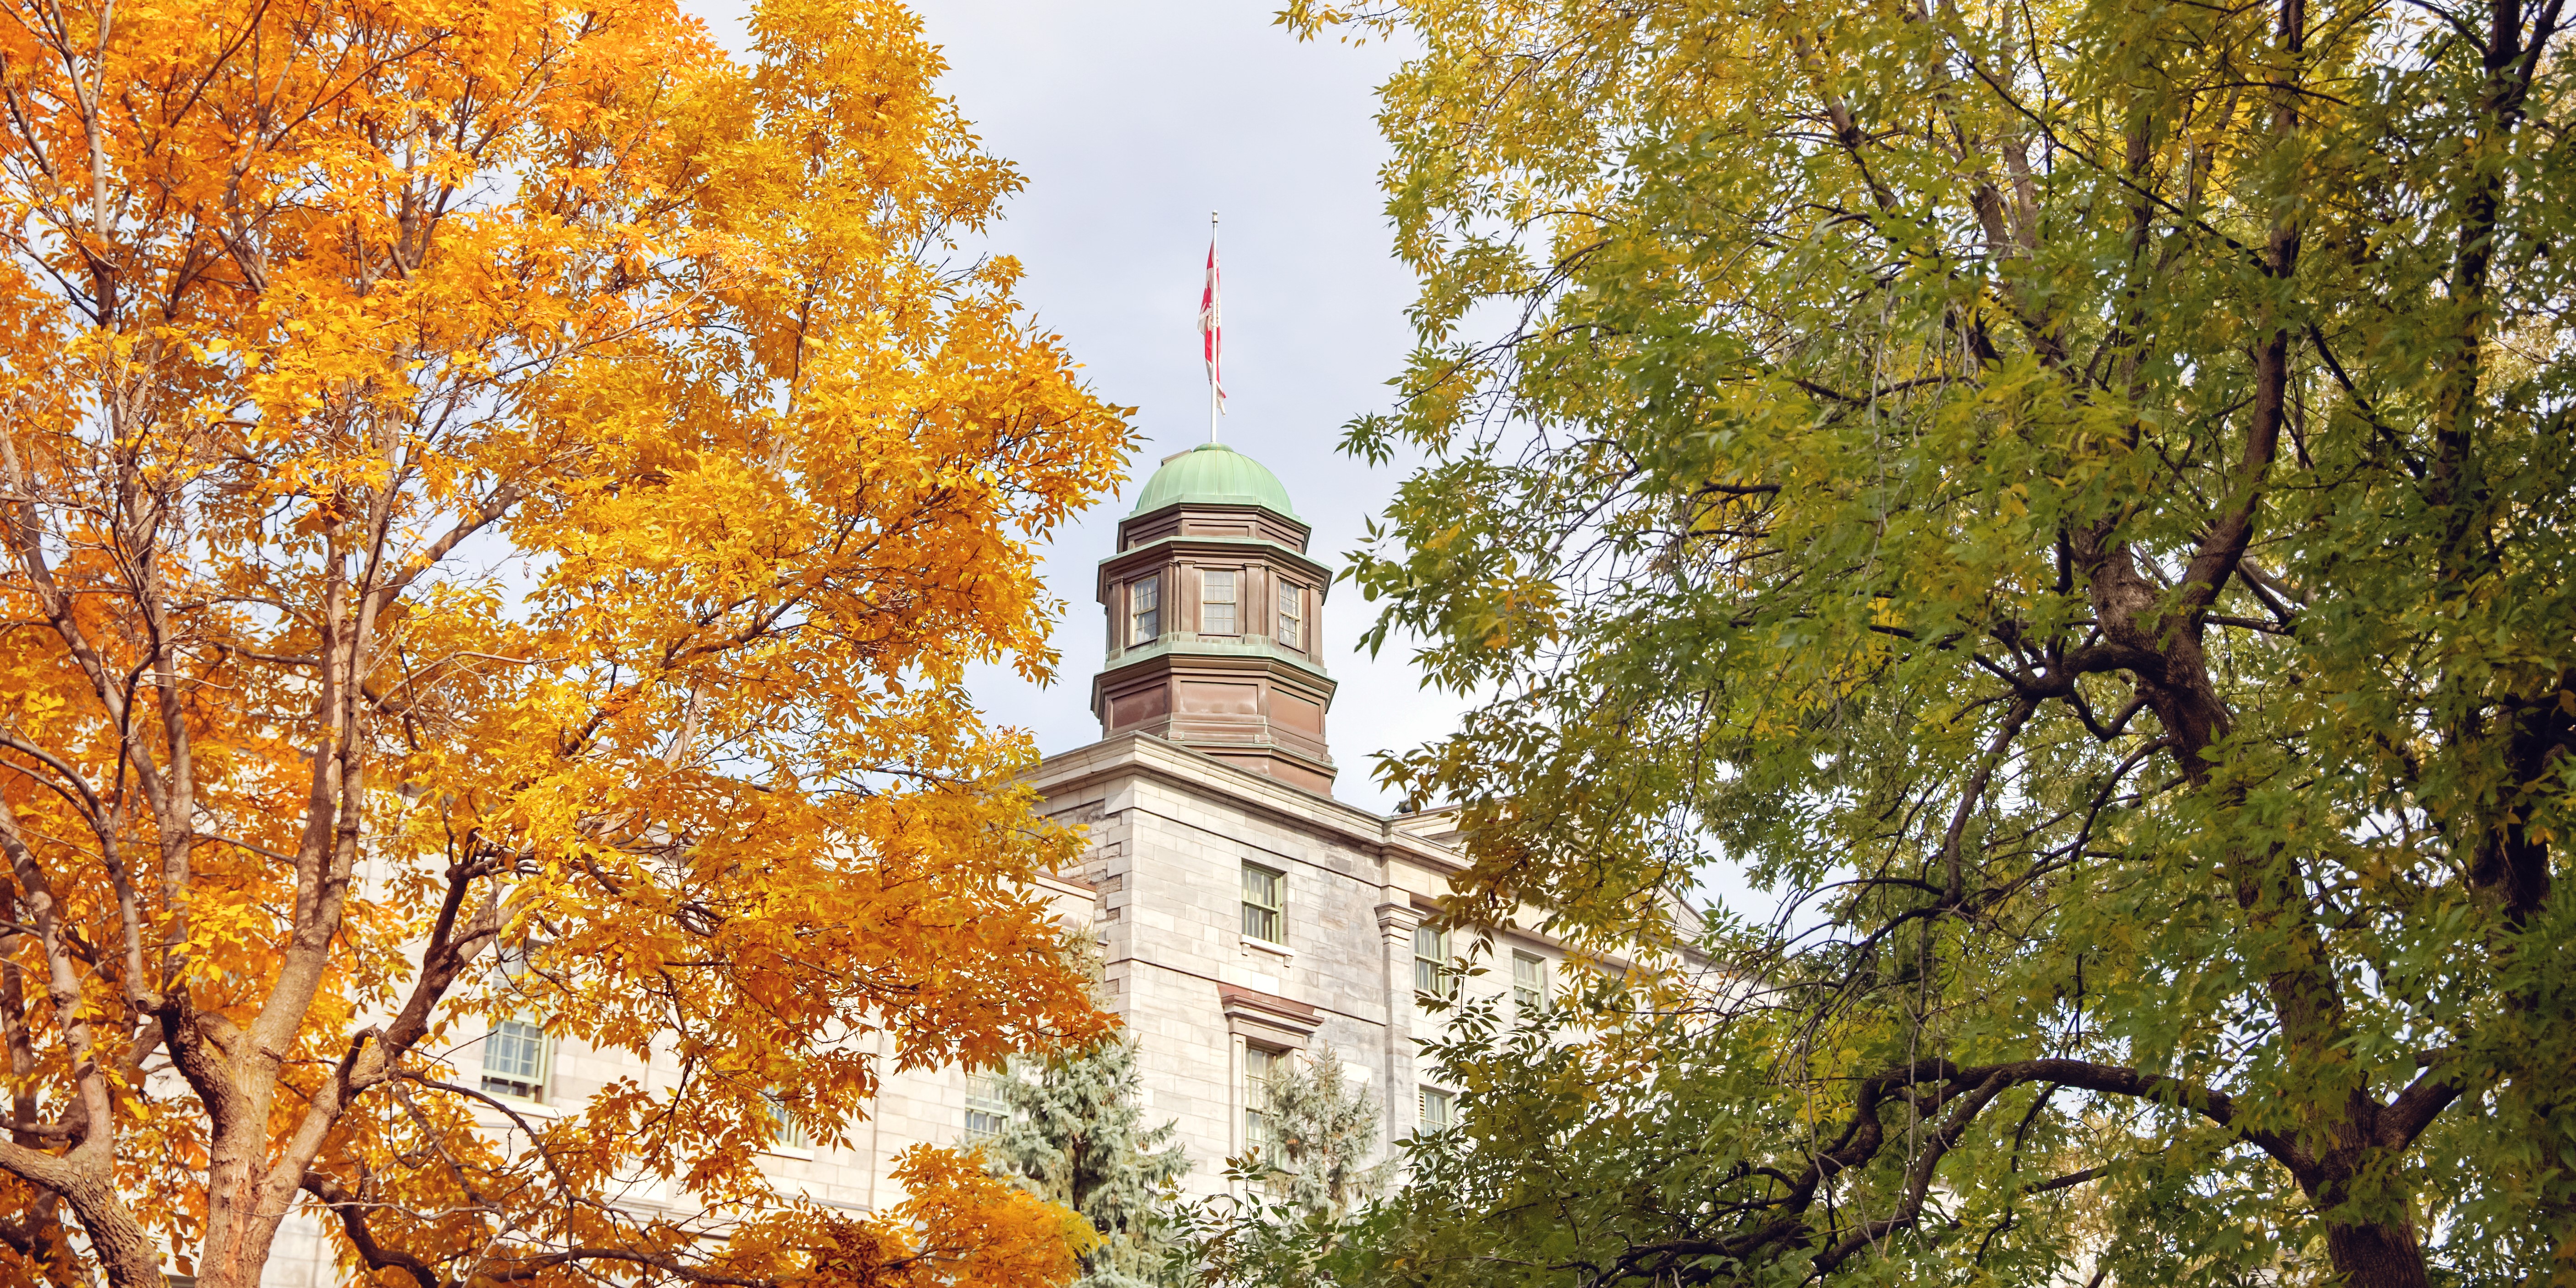 Arts building cupola framed by autumn foliage